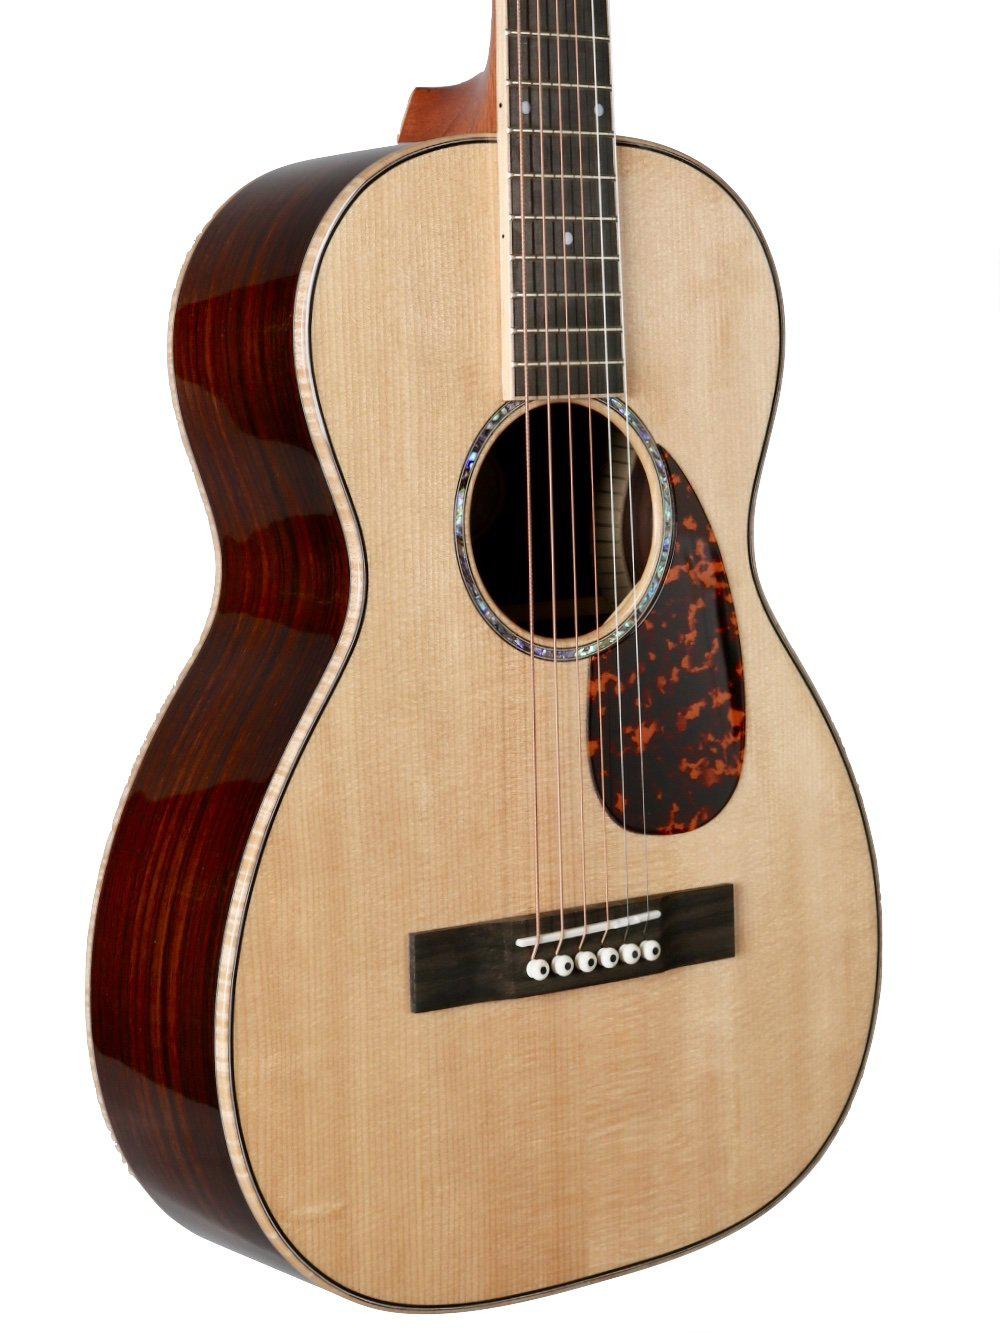 Larrivee P-09 Sitka Spruce / Indian Rosewood #133756 - Larrivee Guitars - Heartbreaker Guitars